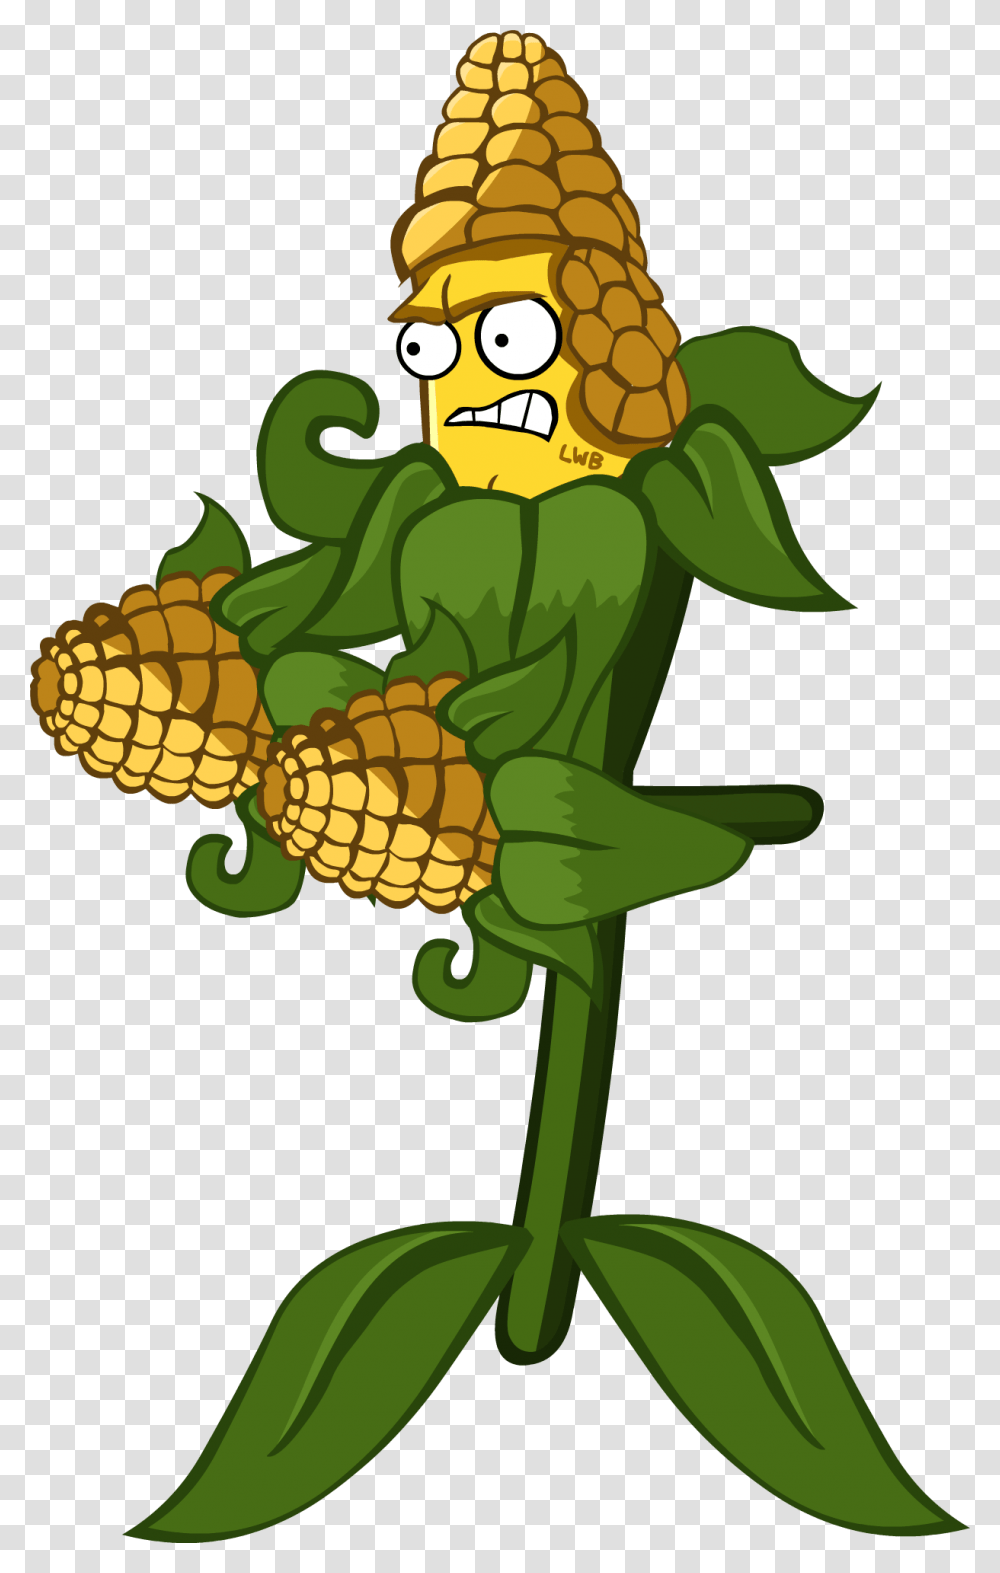 Crops Clipart Corn Leaf Plants Vs Zombies 2 Corn, Food, Produce, Vegetation, Vegetable Transparent Png